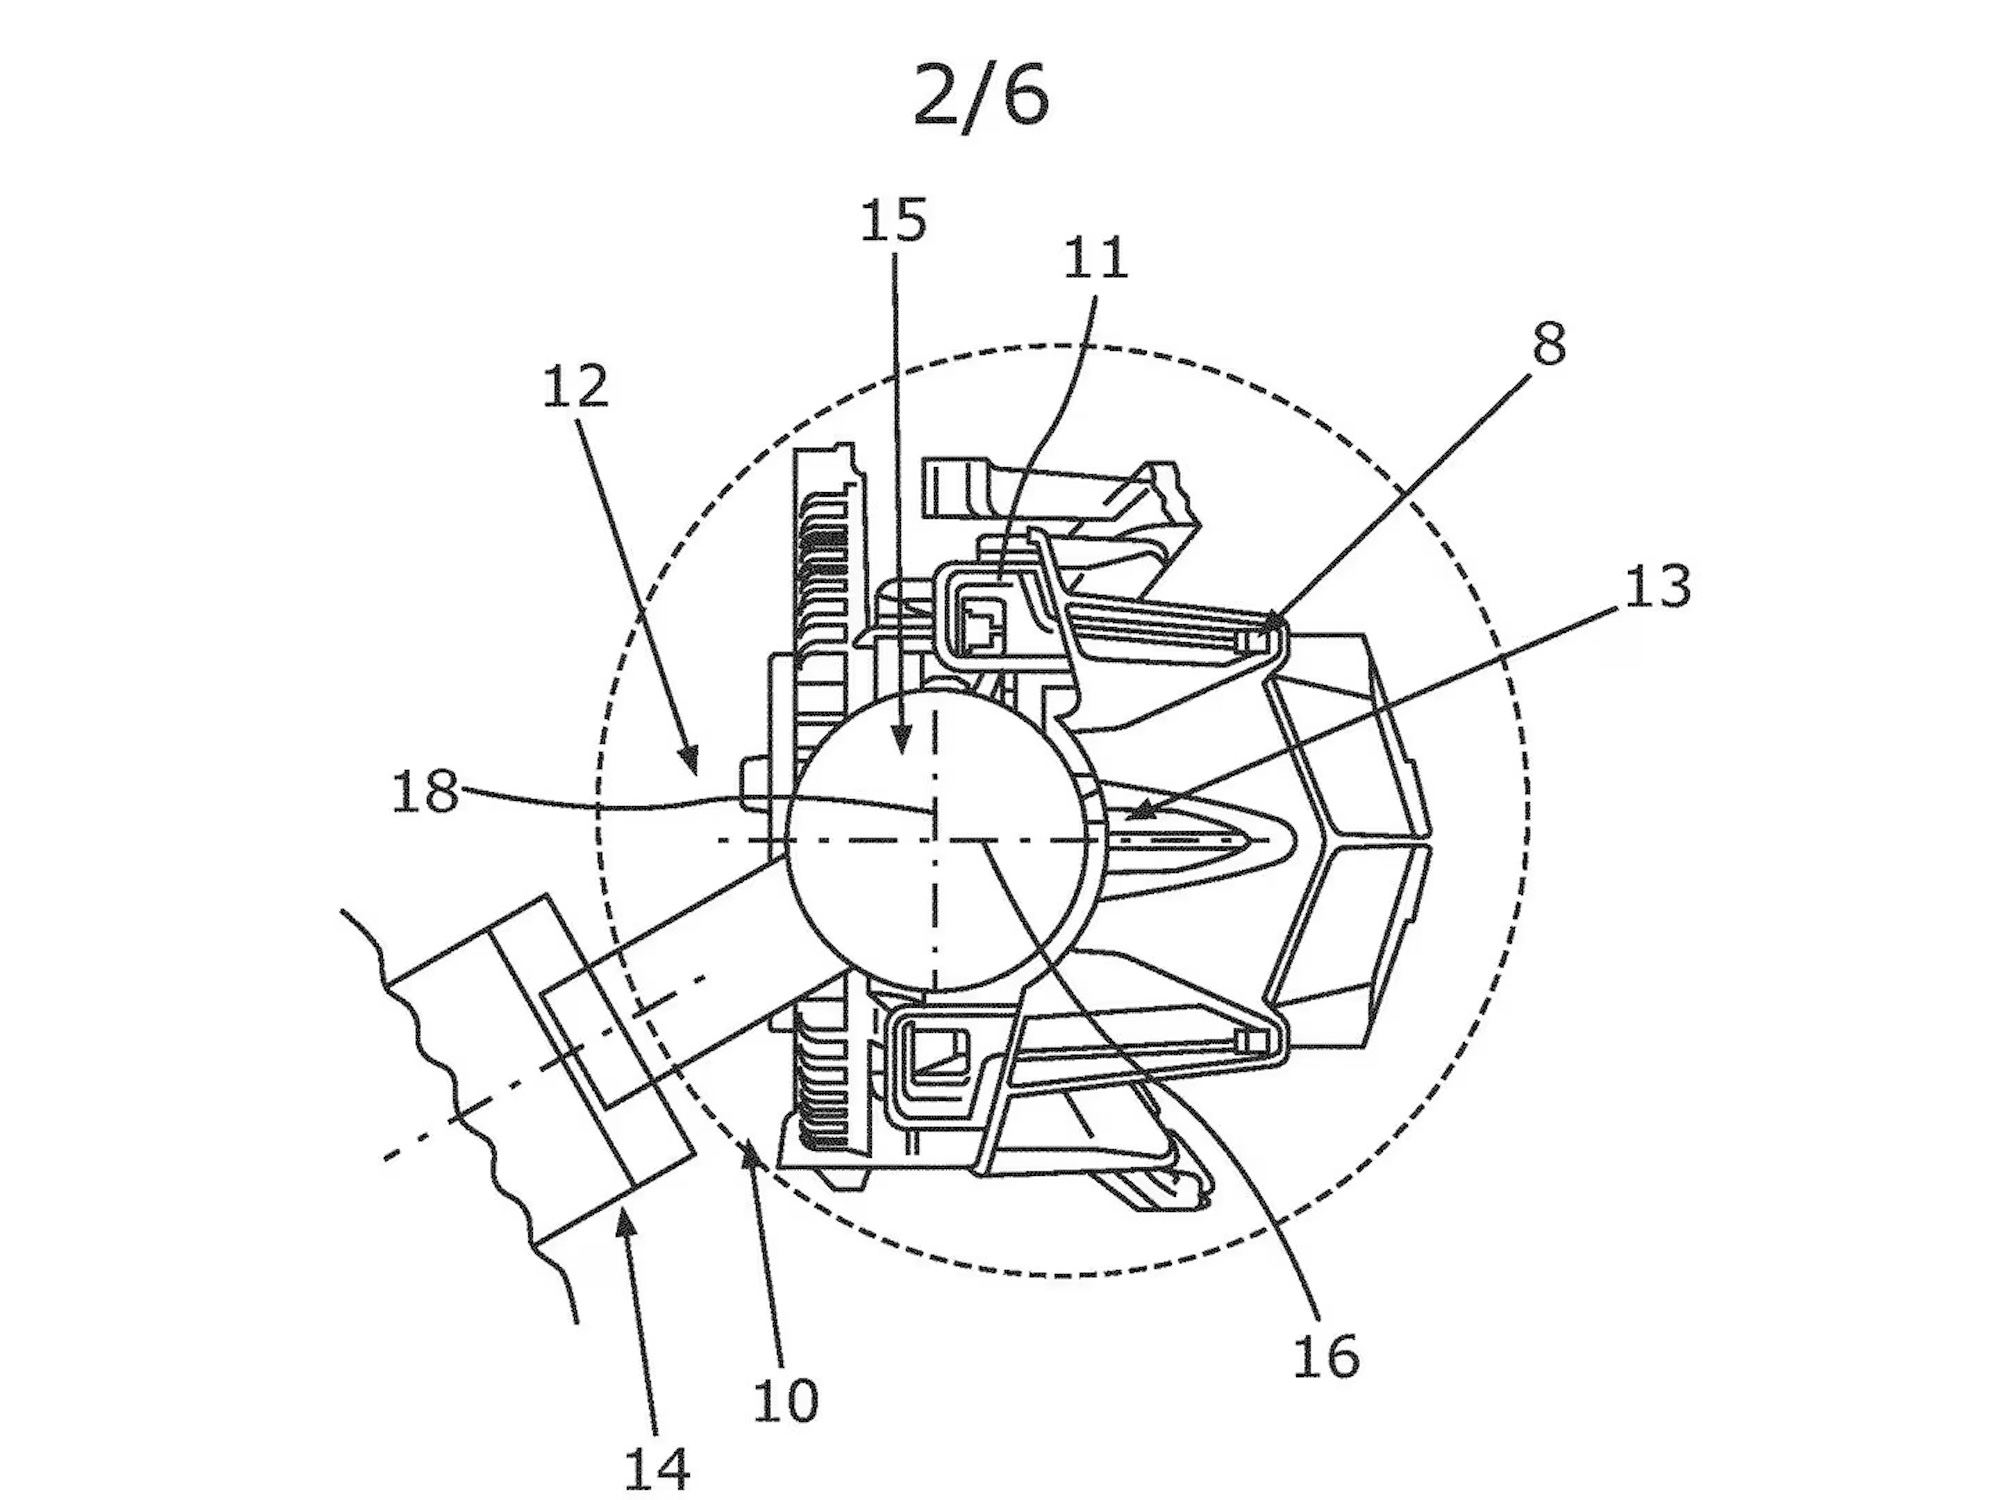 Blueprints of an adaptive motorcycle headlight using gimbal technology.